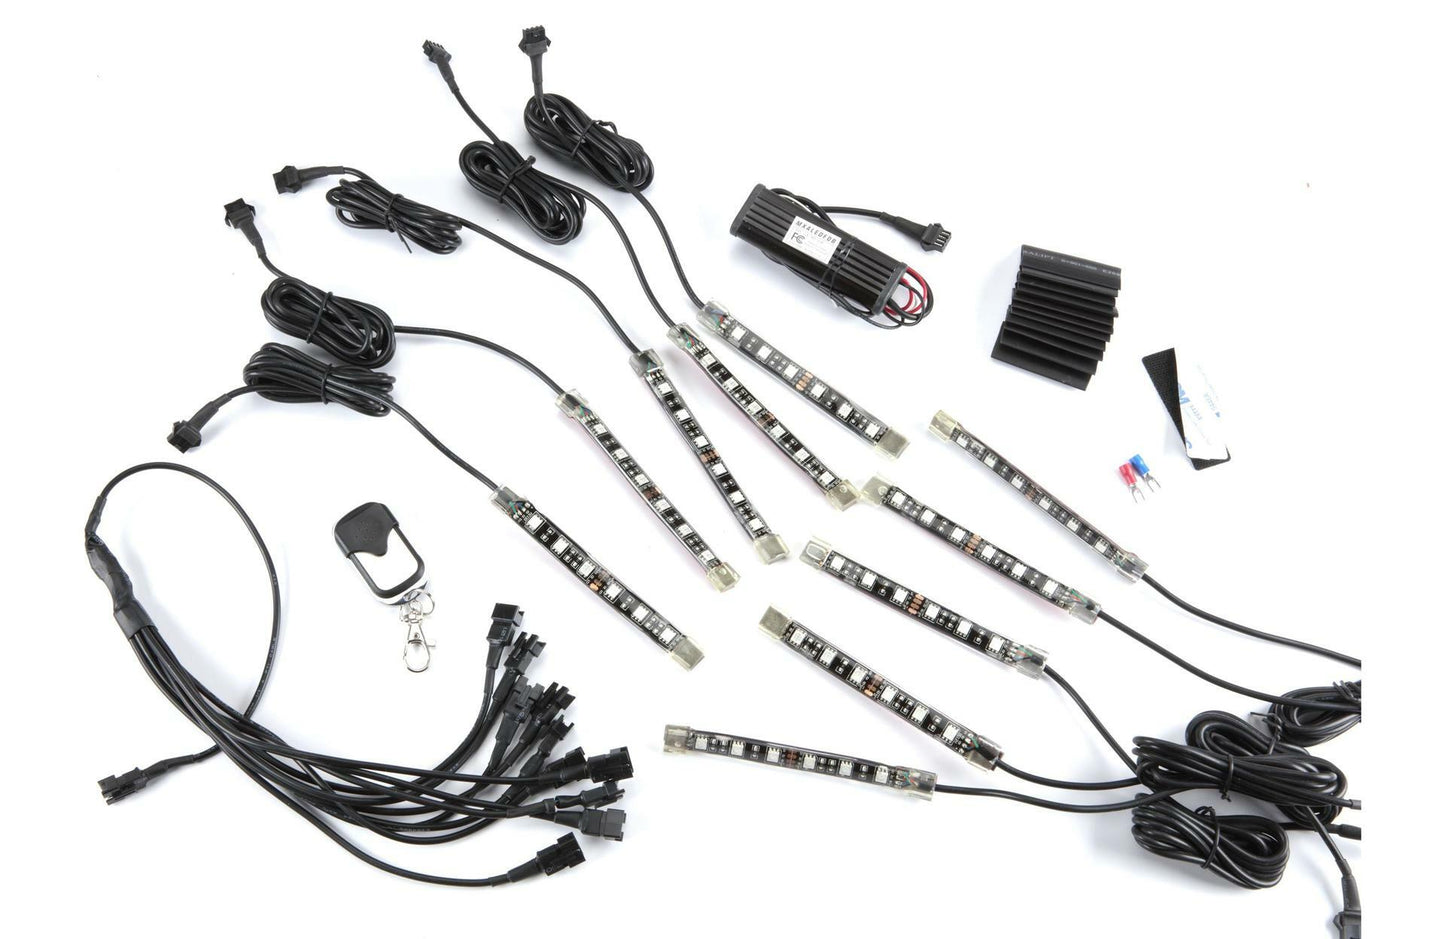 Memphis MXALEDFOB Marine/Powersports LED Lighting System W/ Keyfob Remote Control